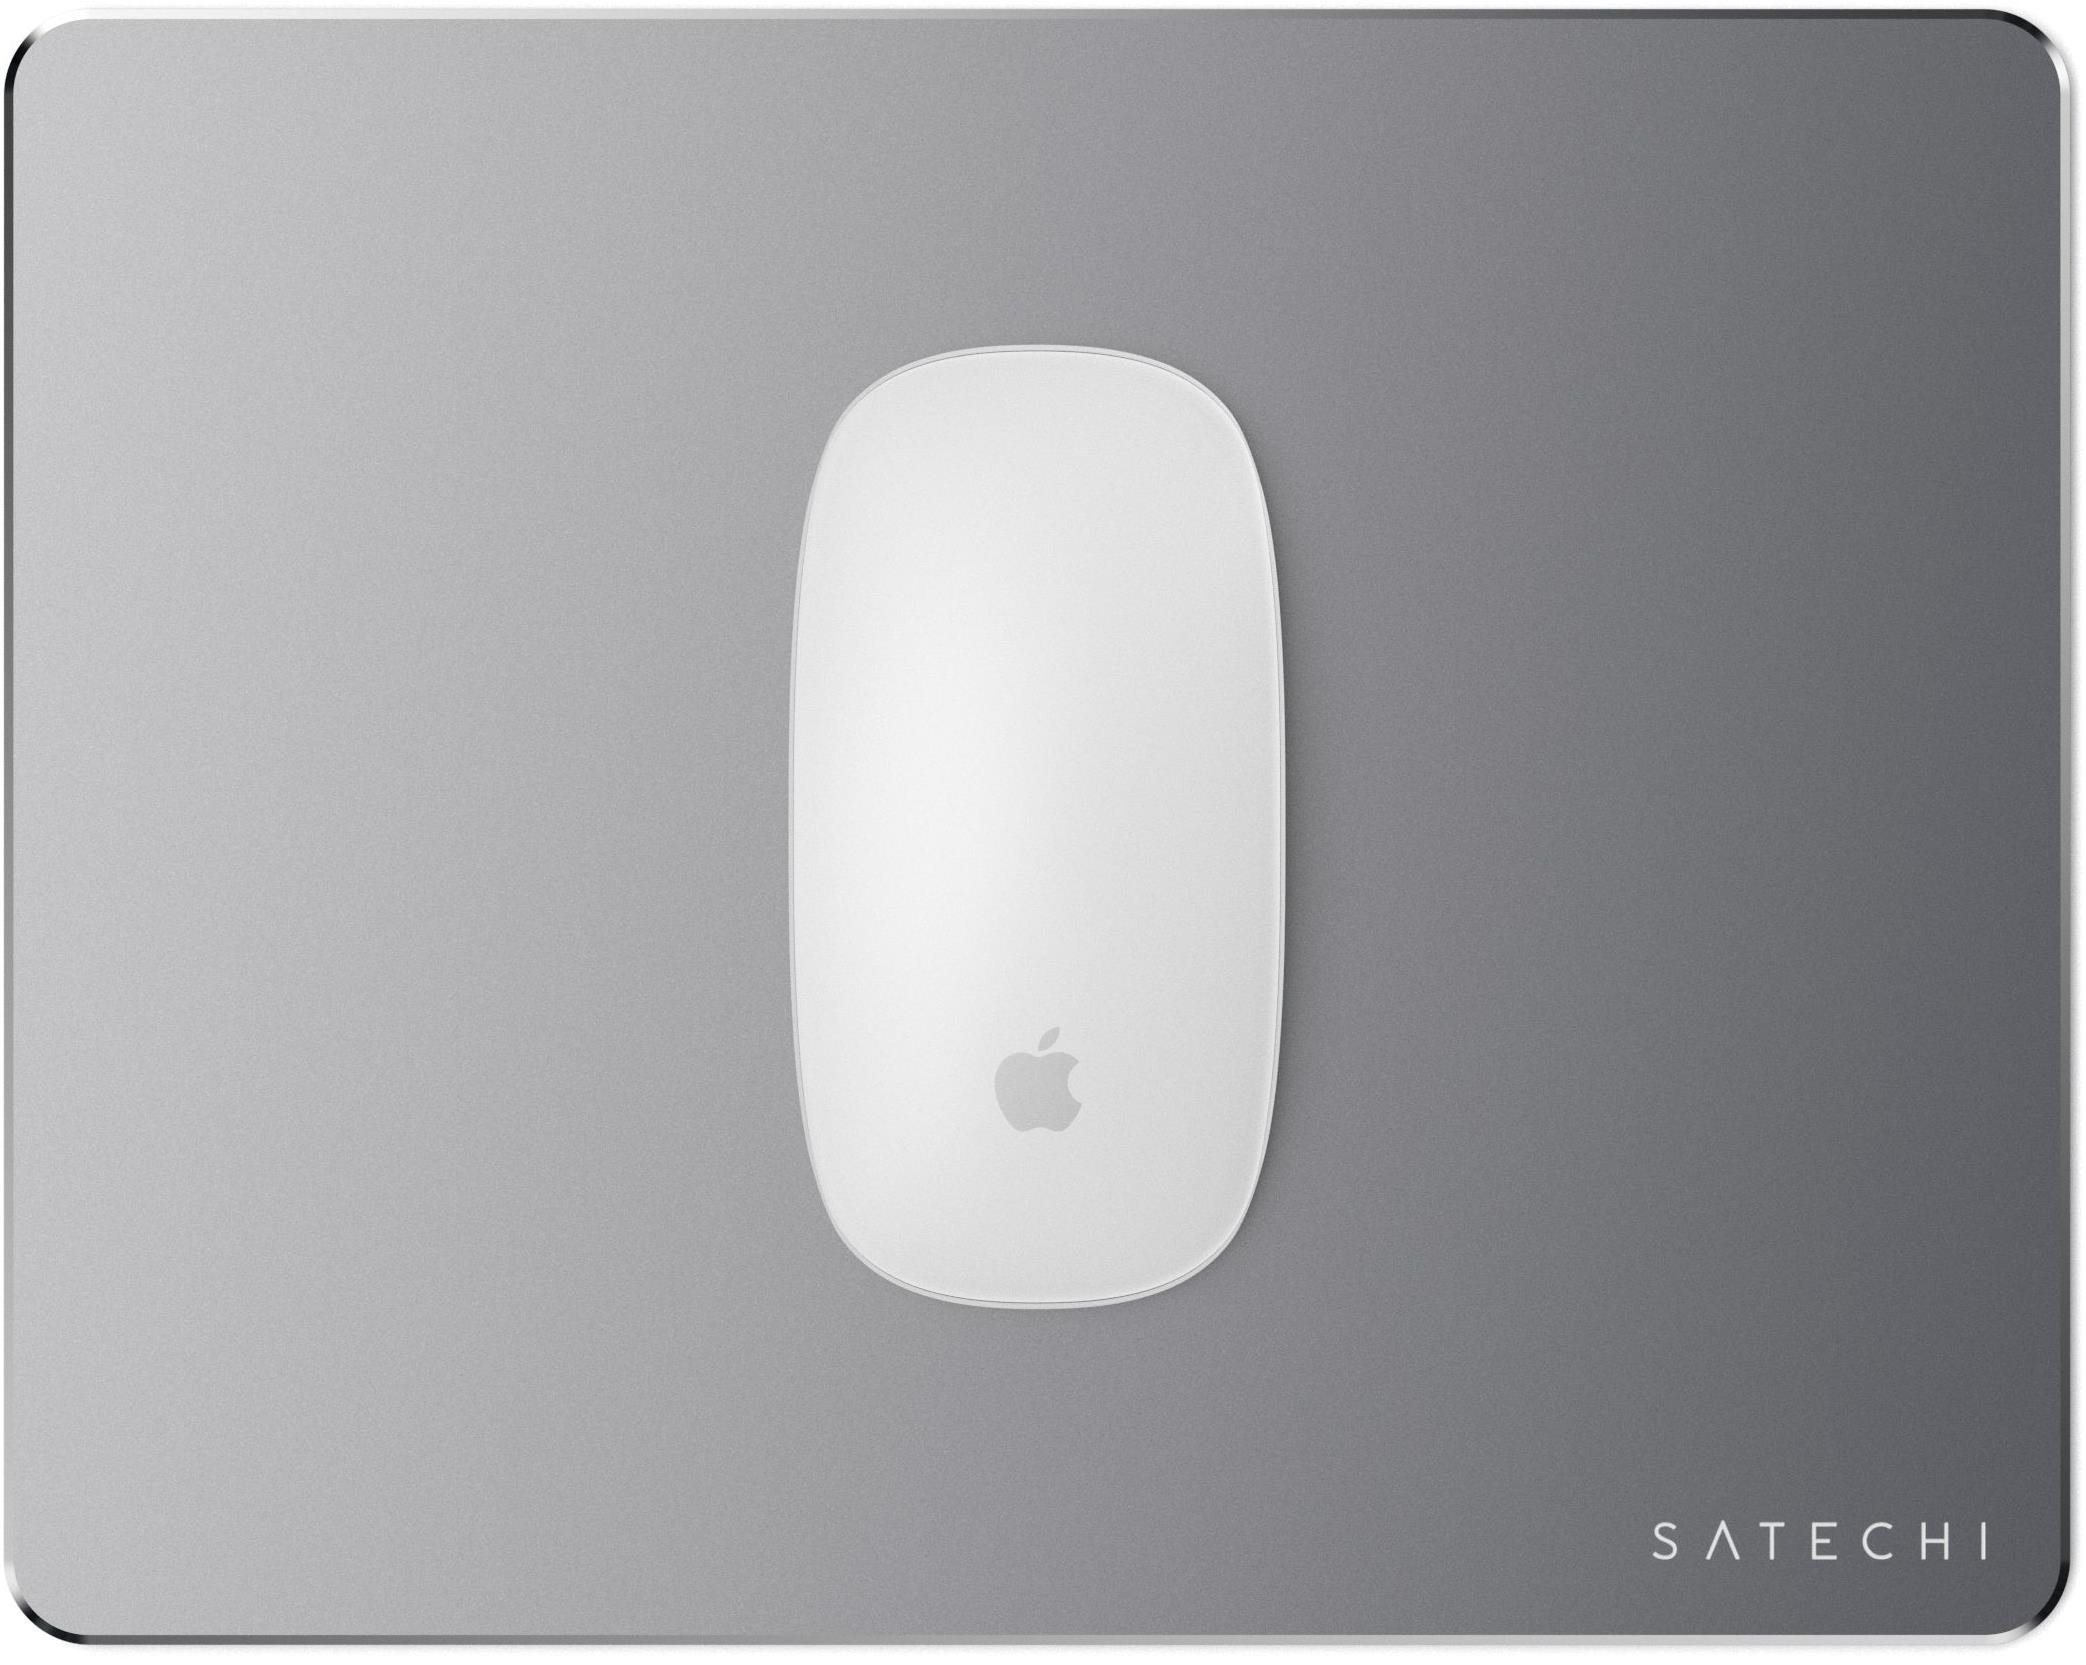 Mouse Pad Satechi Aluminium Mouse Pad - Space Grey Screen